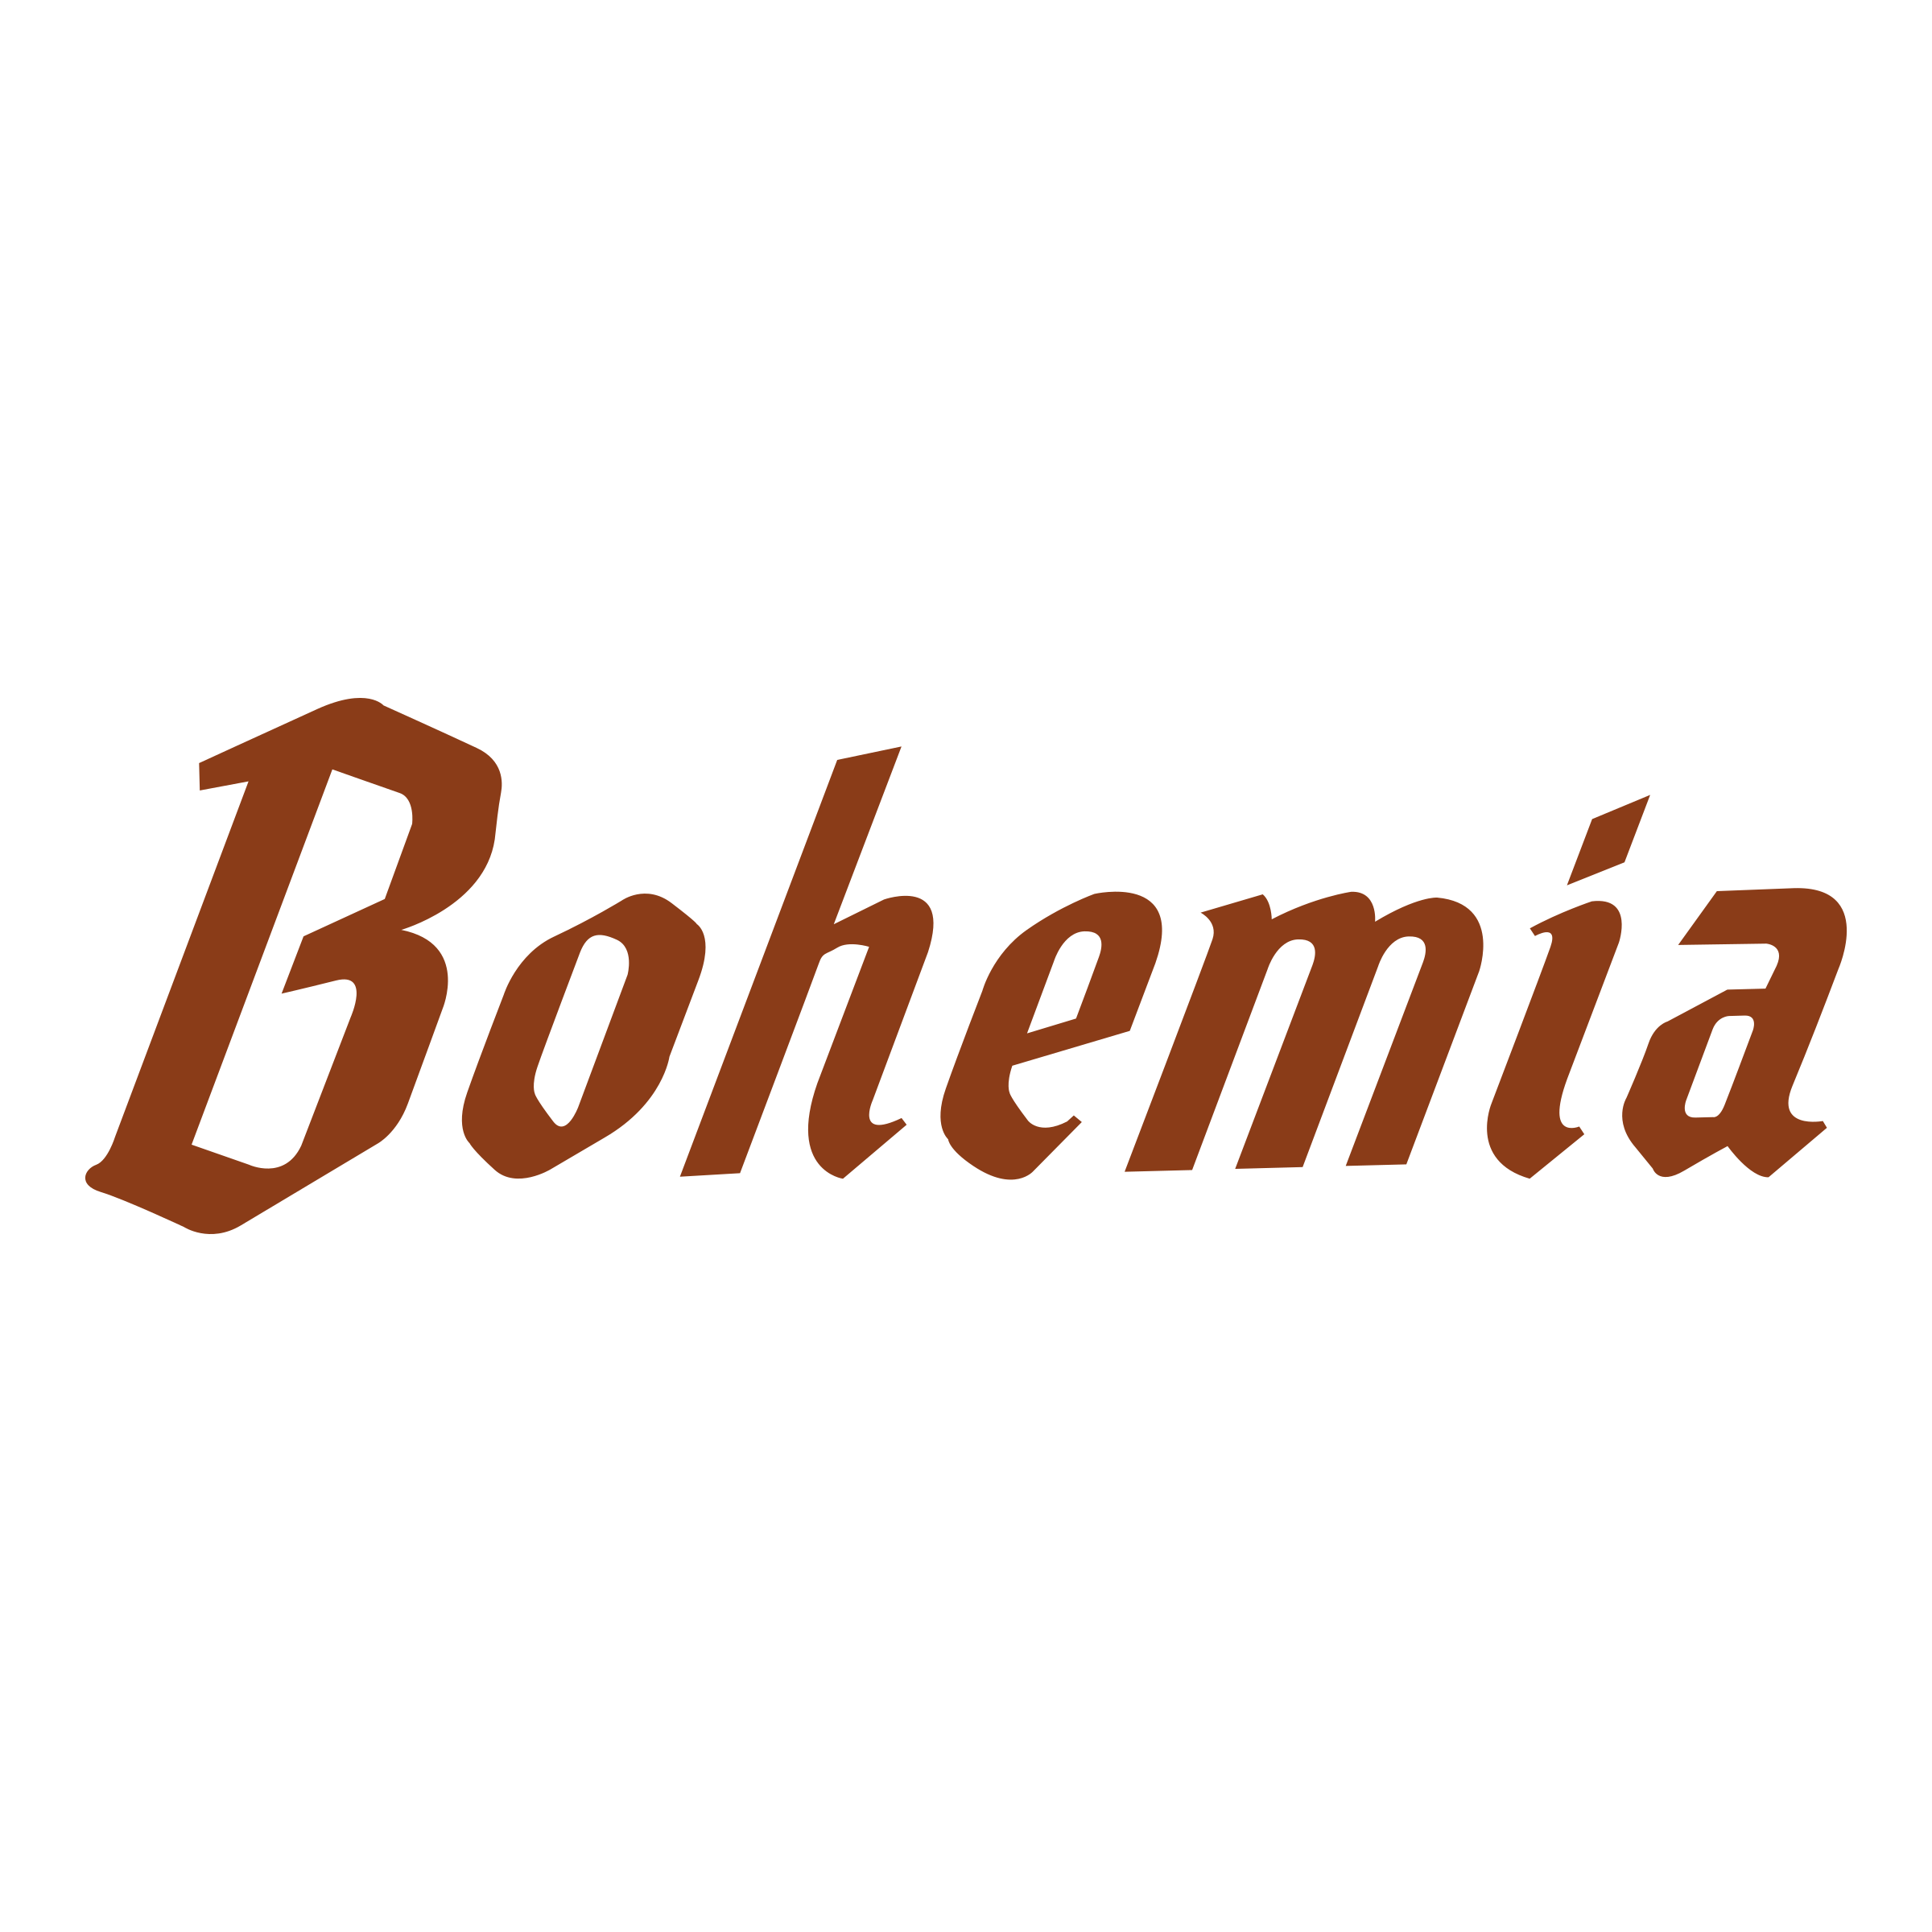 Bohemia Logo - Bohemia Logo PNG Transparent & SVG Vector - Freebie Supply